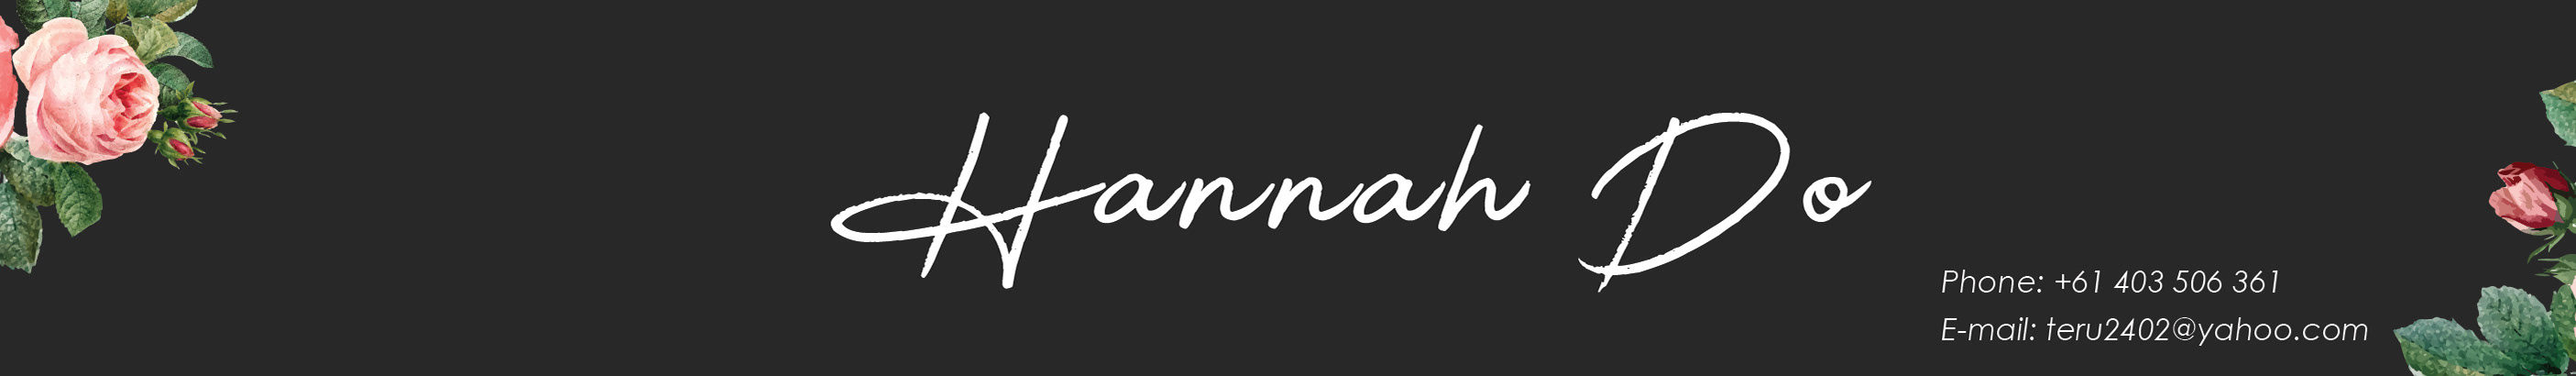 Hannah Do's profile banner